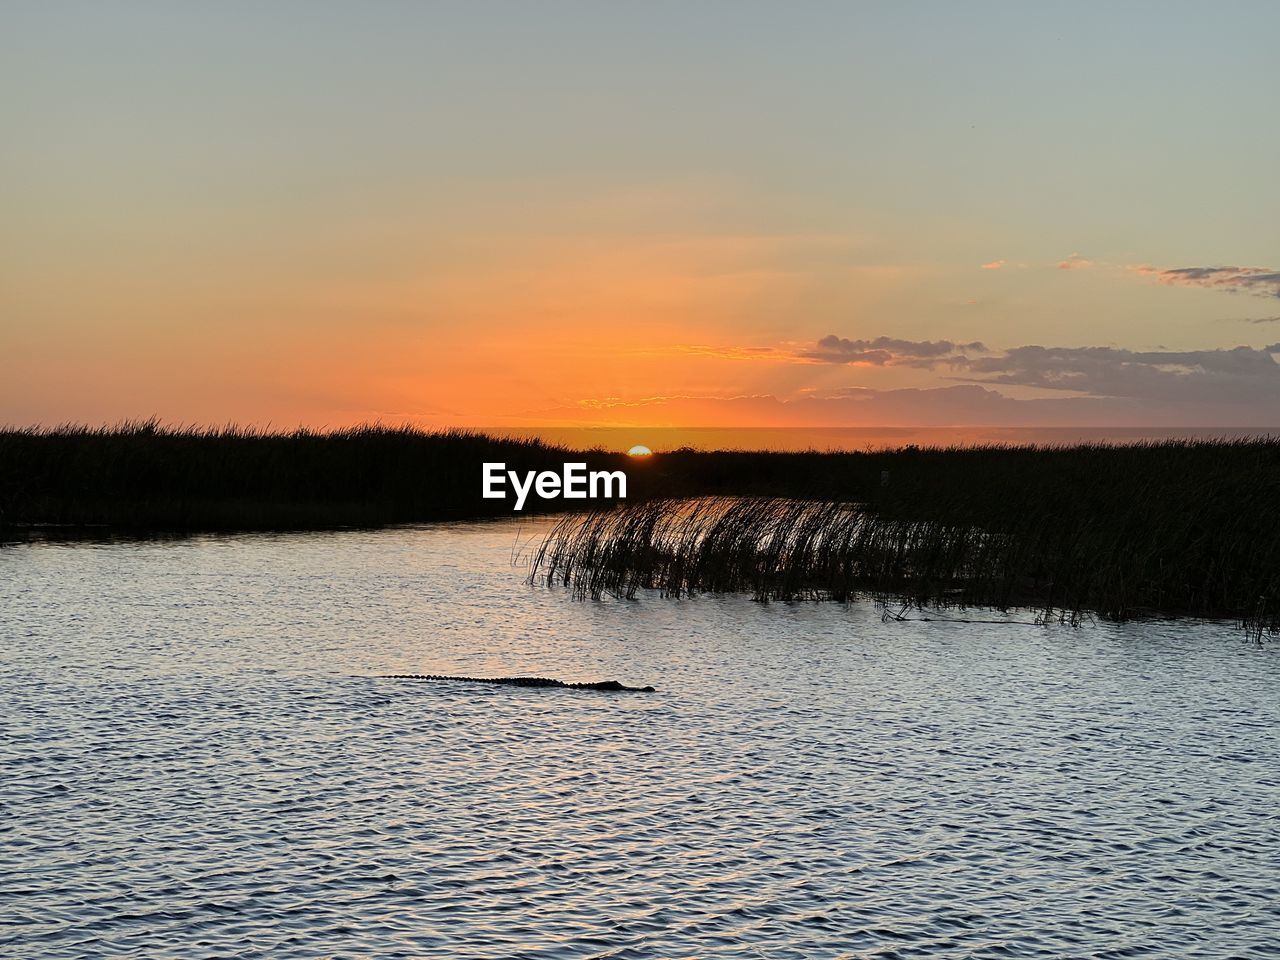 Gator cruising by a south florida sunset